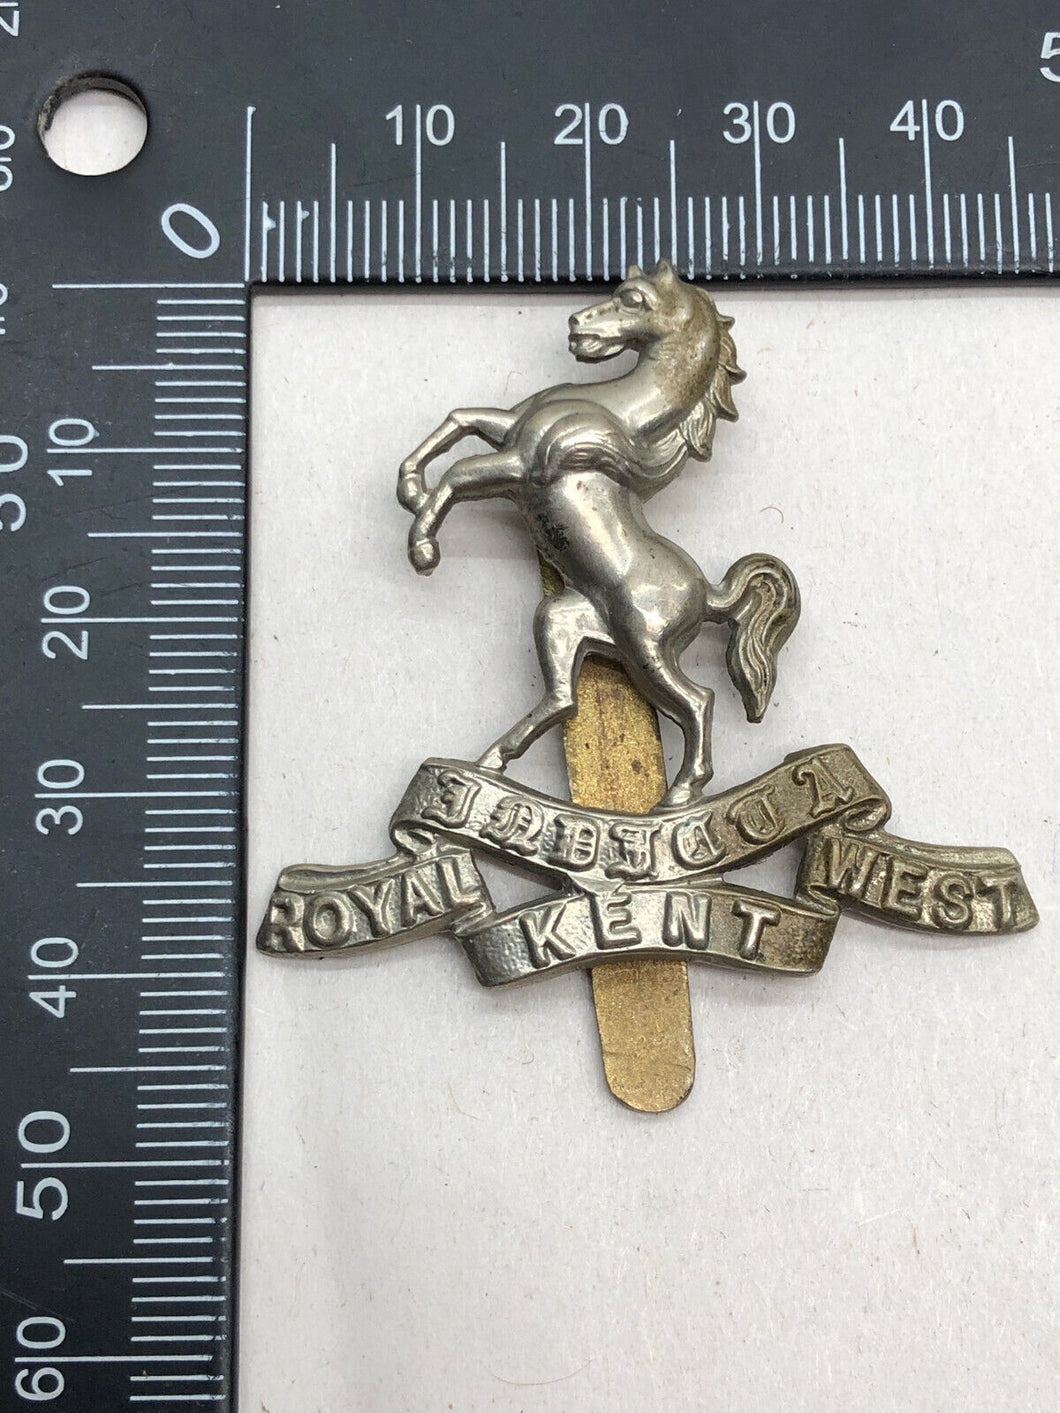 Original WW2 British Army Cap Badge - The Royal West Kent Regiment